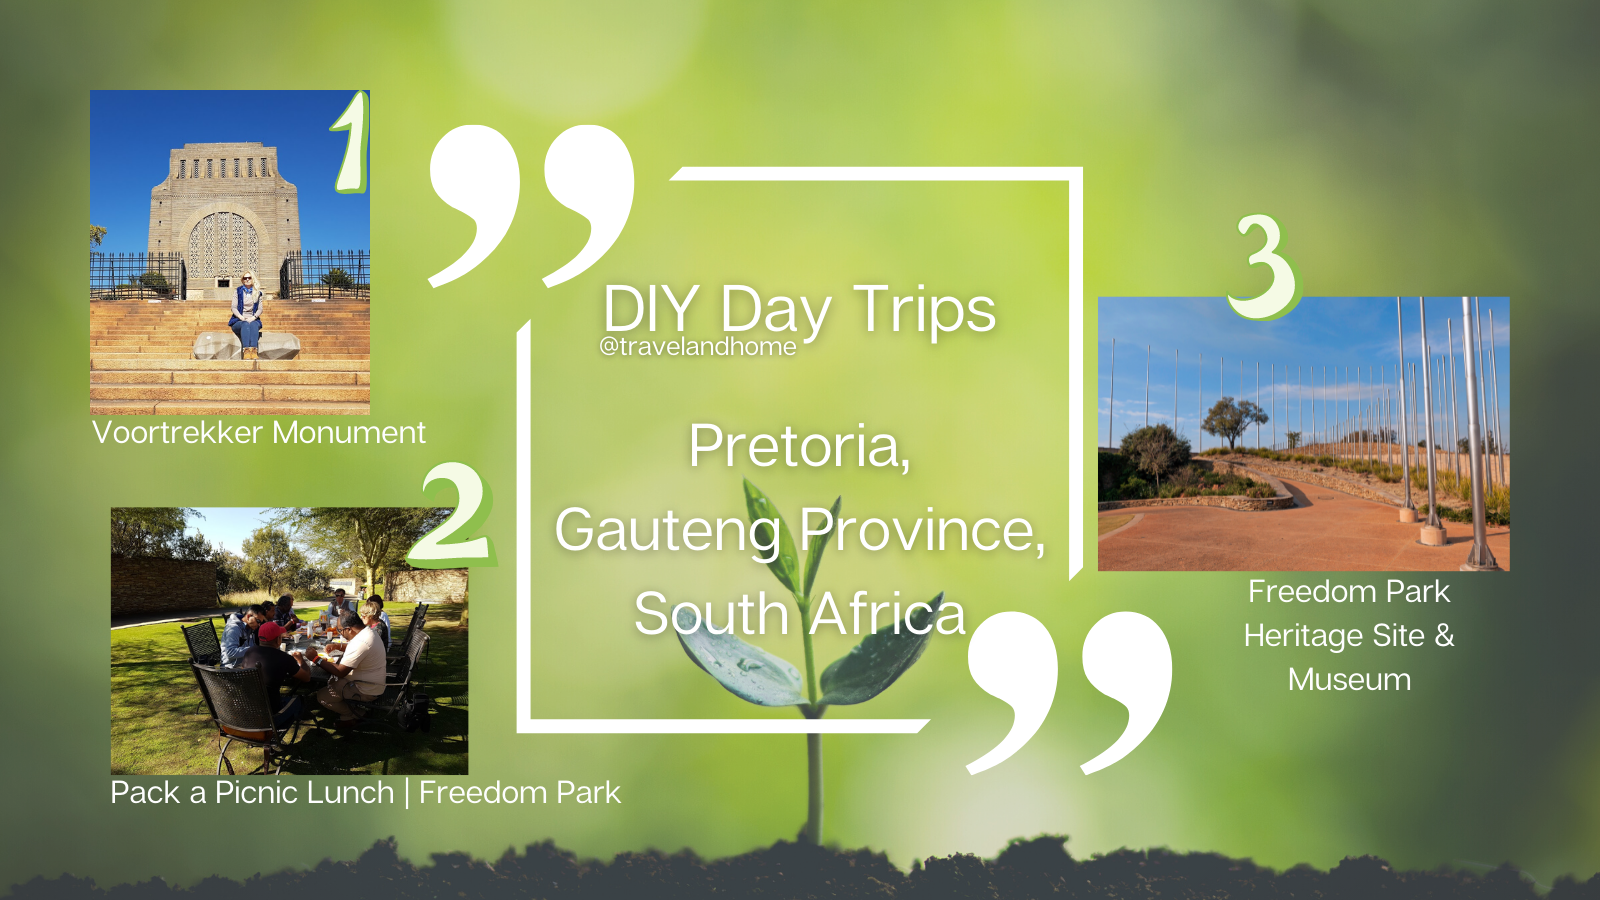 diy day trips pretoria tshwane voortrekker monument freedom park heritage site and museum picnic